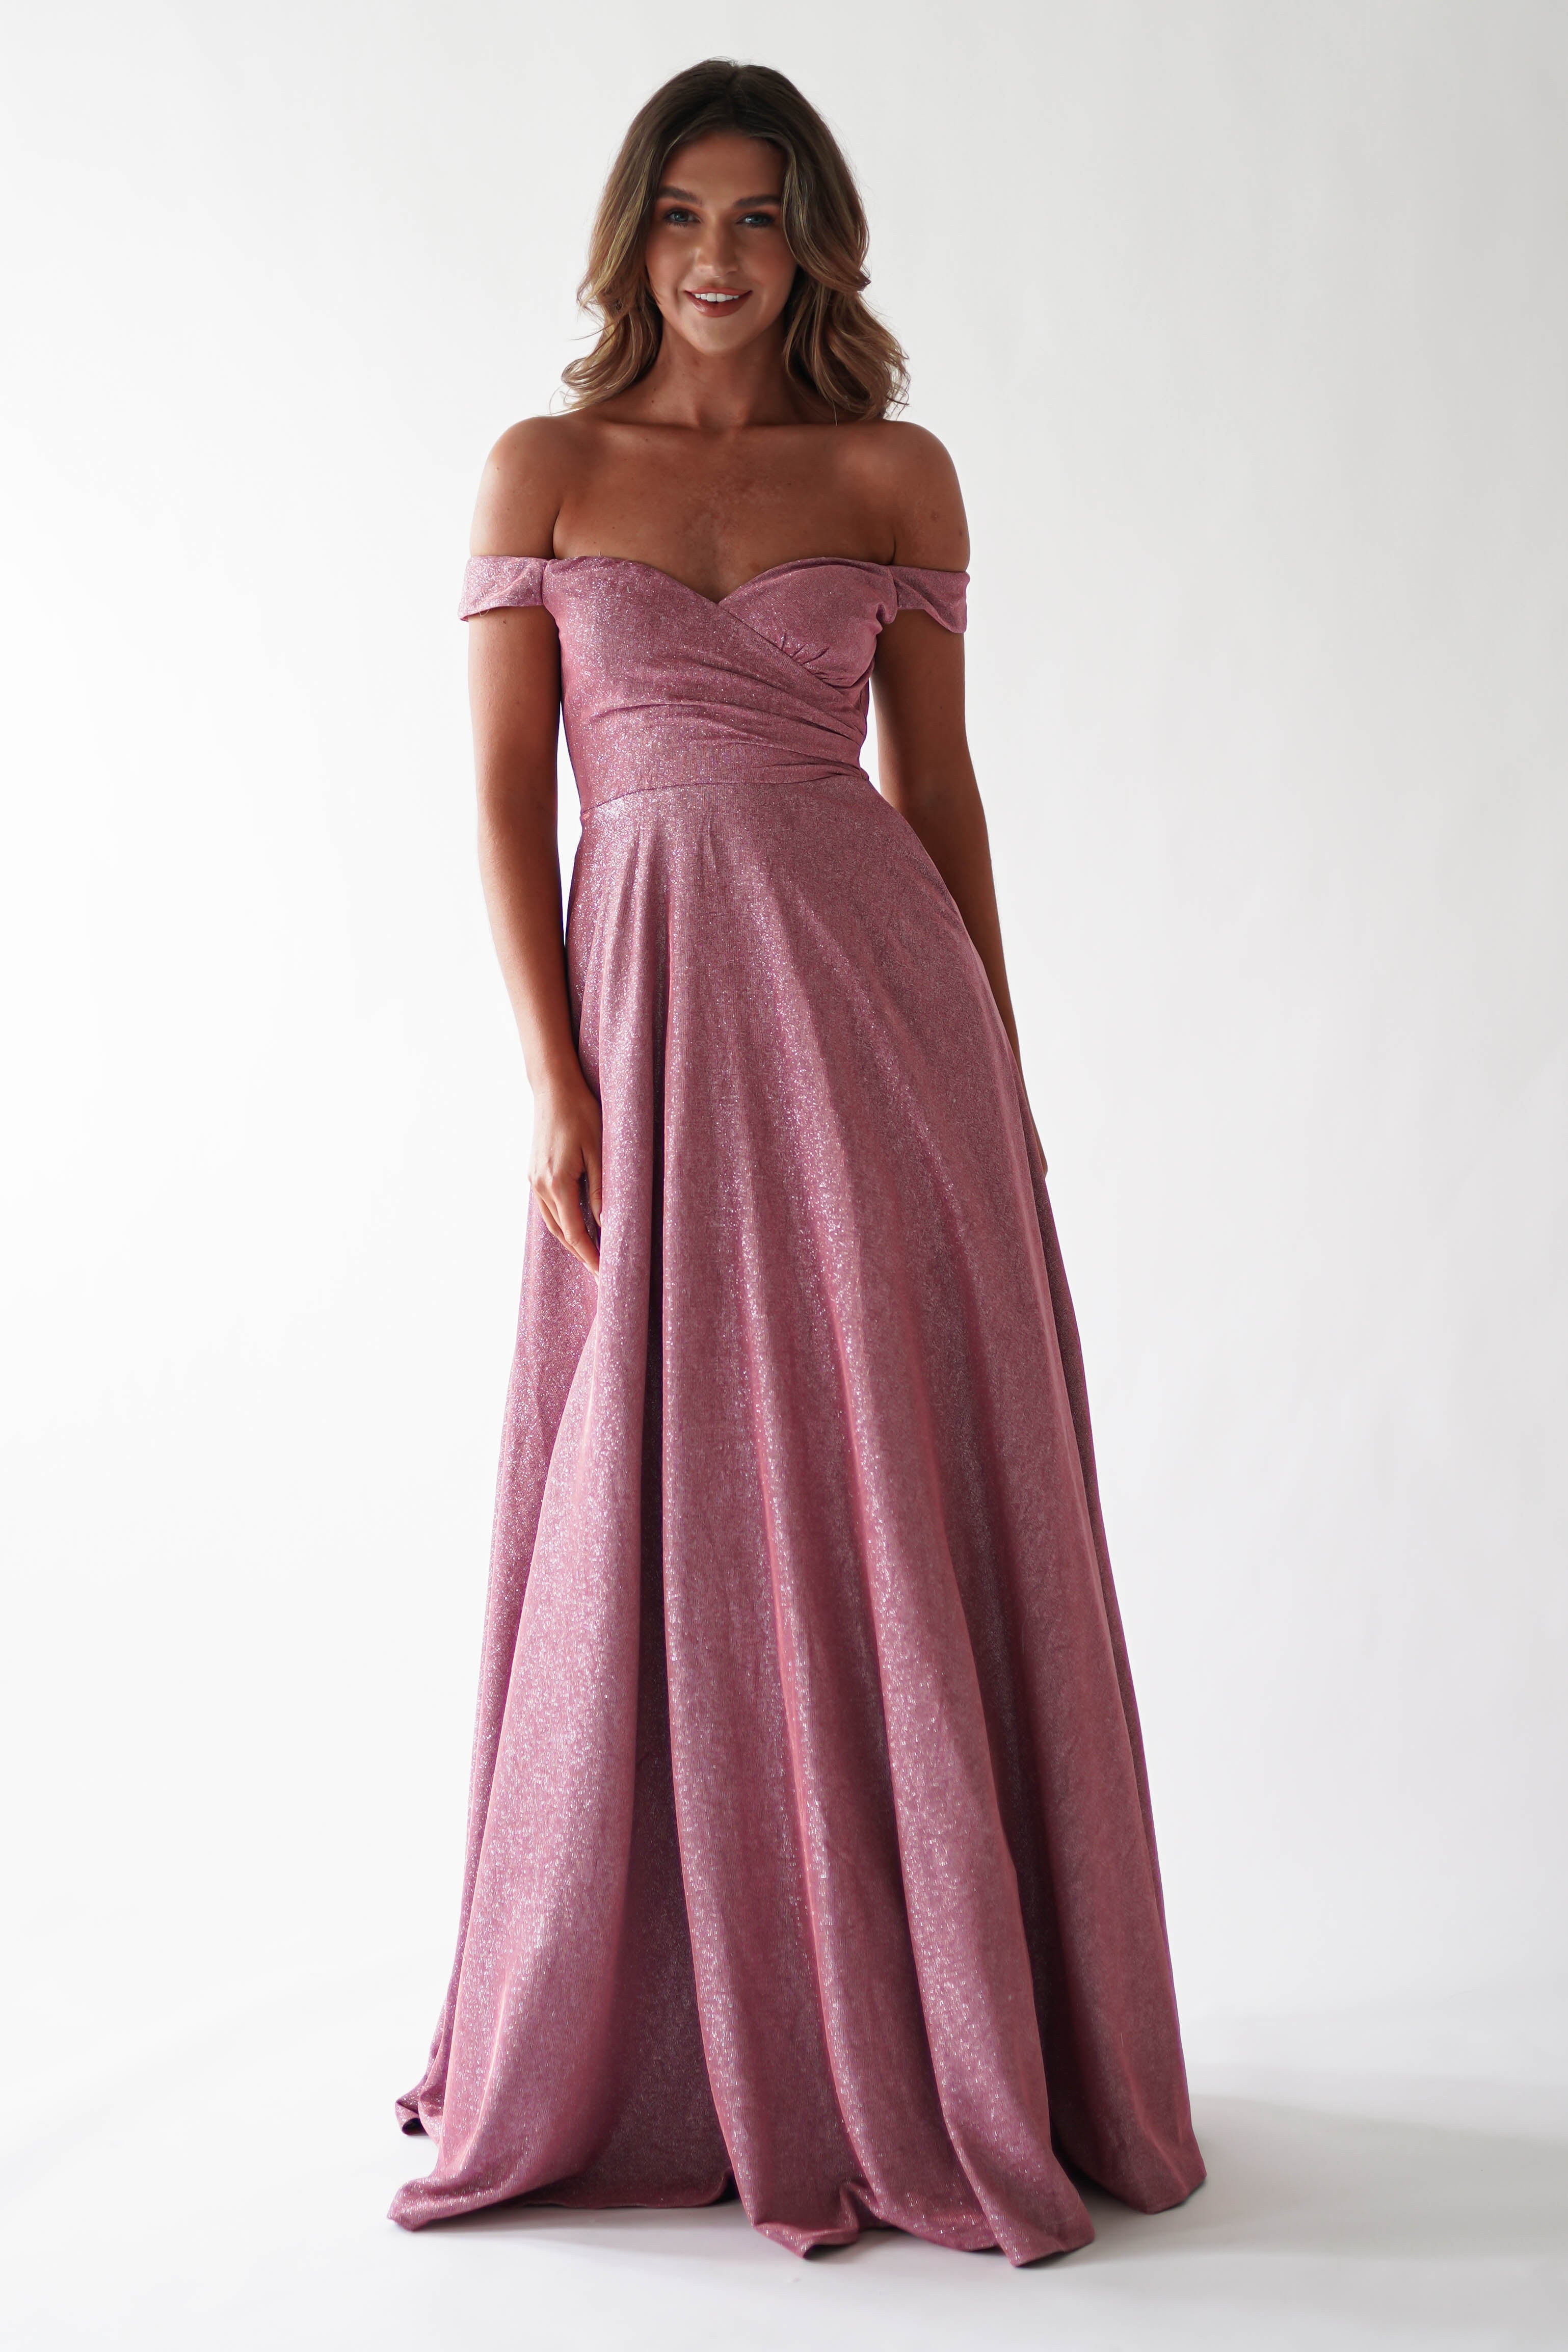 done-mf21479-pink-glitter-gown-with-mesh-underlay-pink-maniju-dresses-52607844188501.jpg